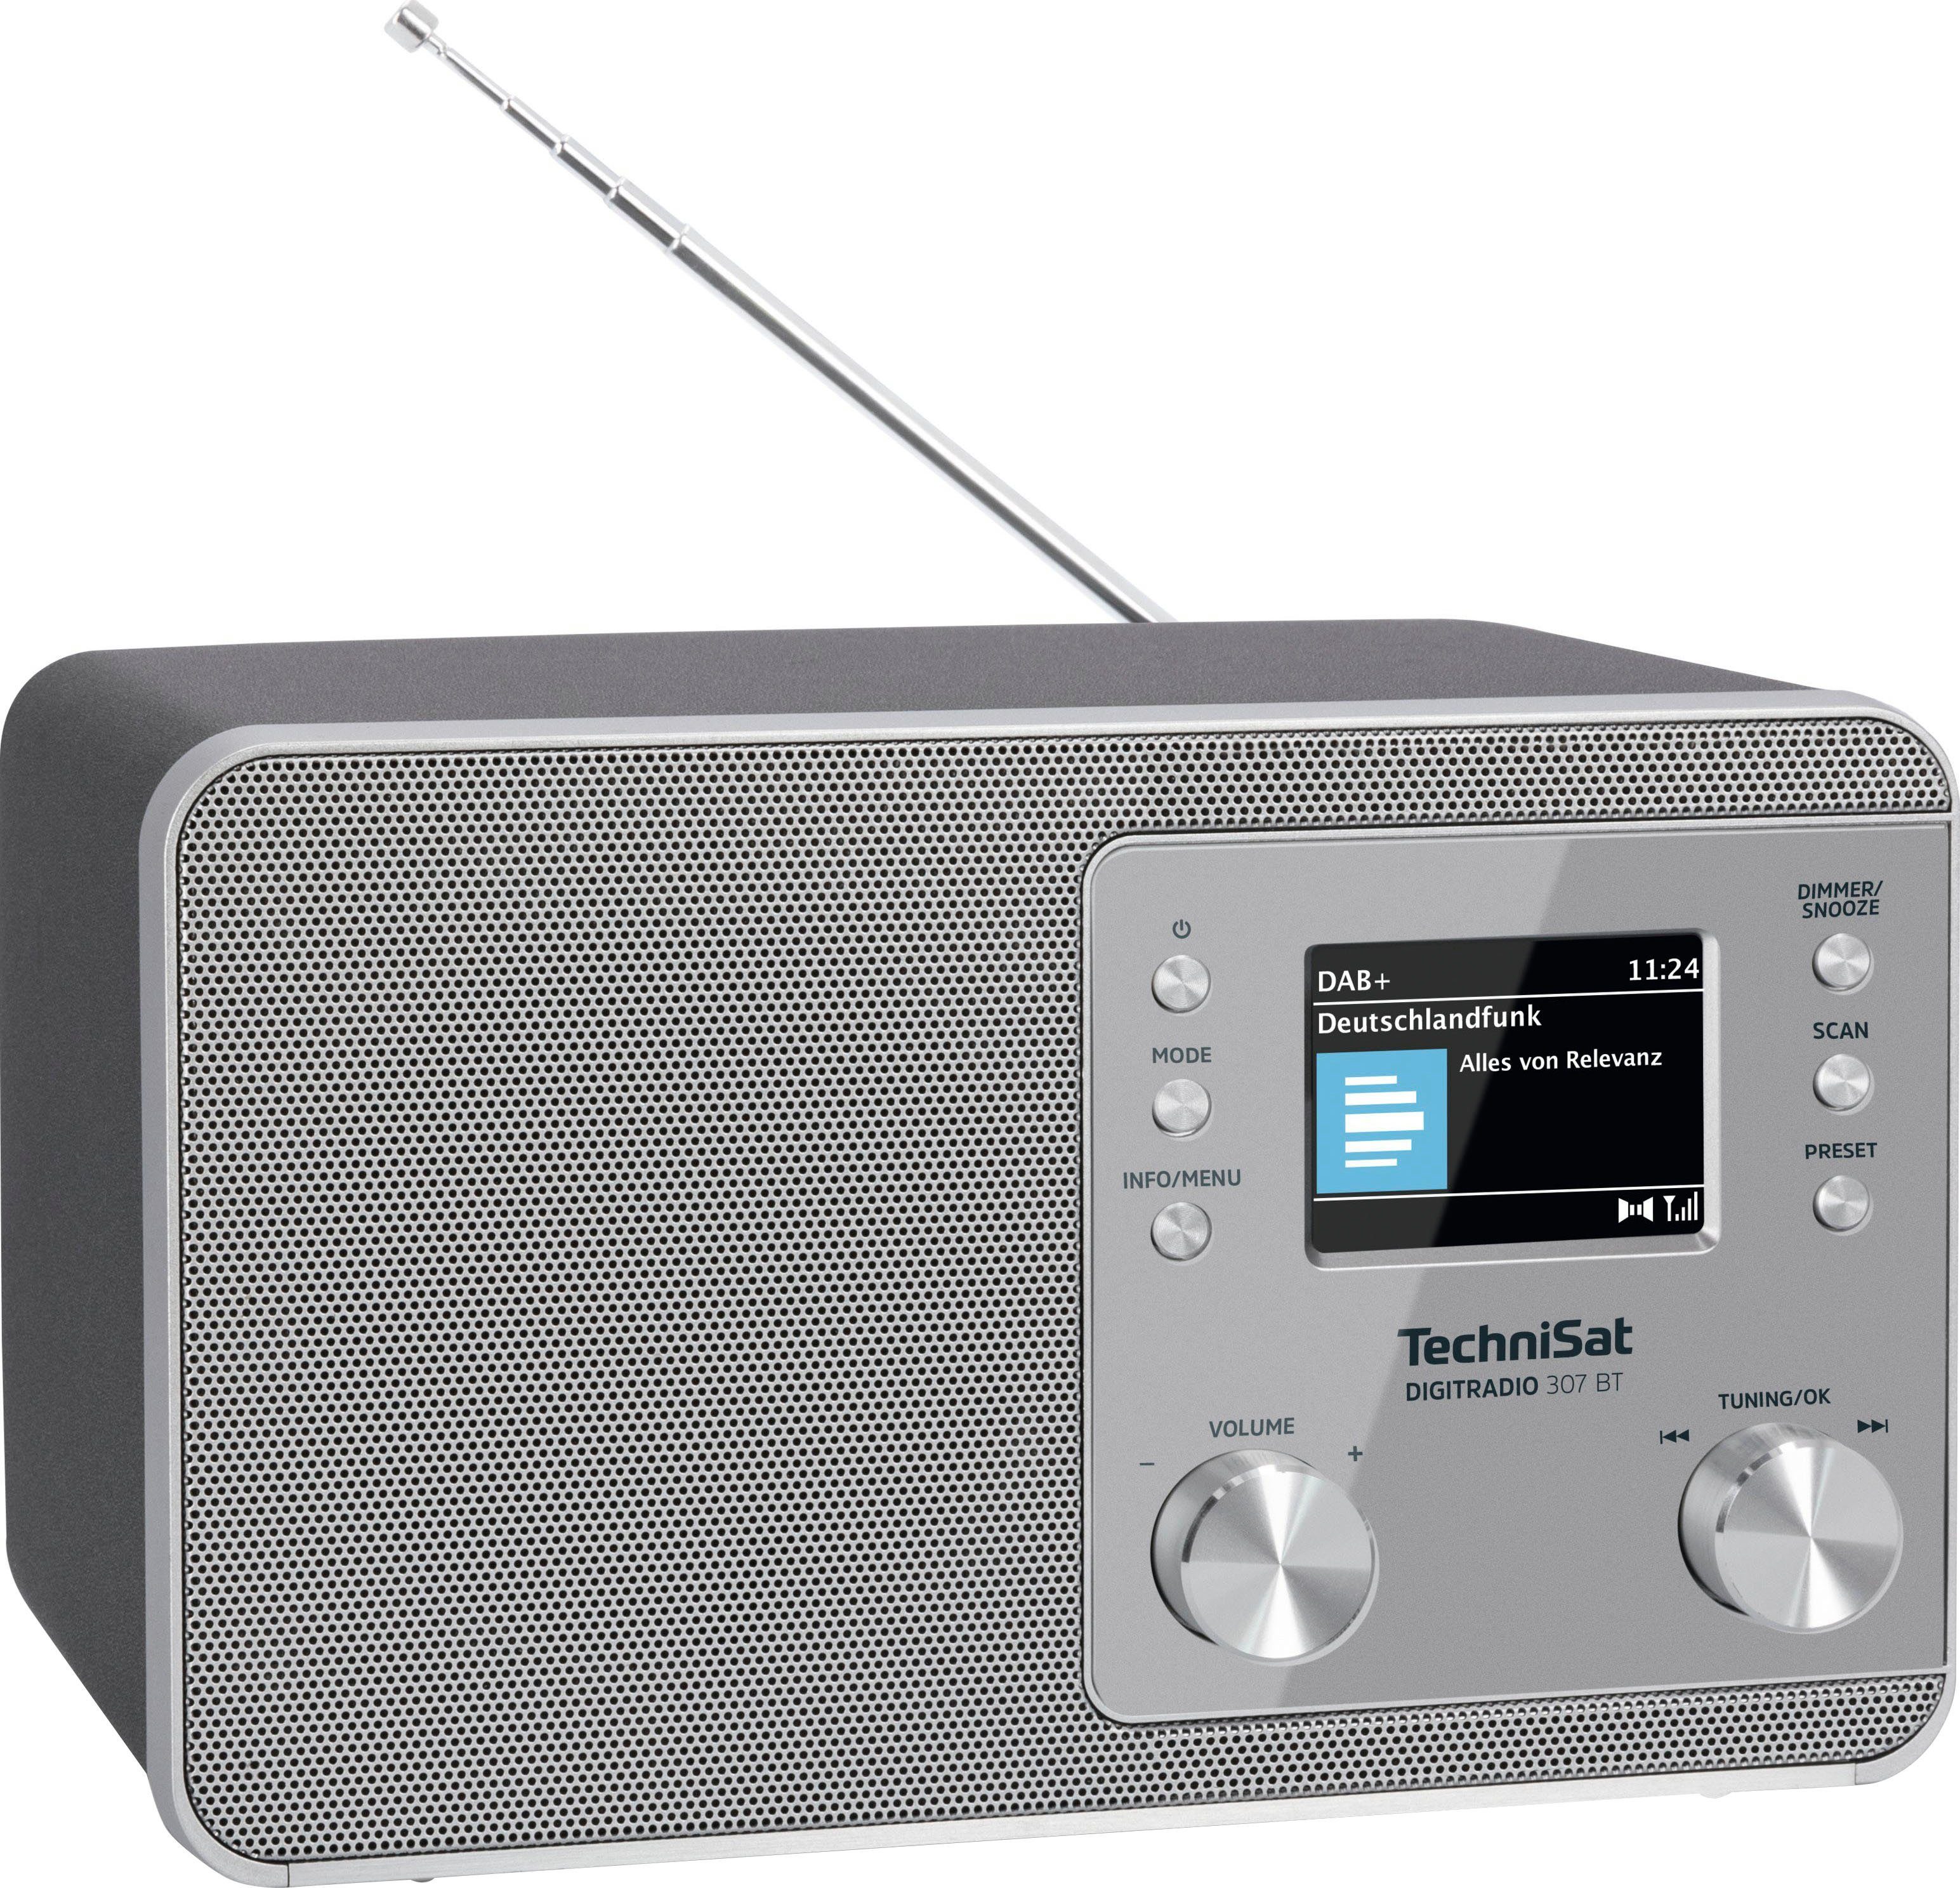 TechniSat DIGITRADIO Silber (Digitalradio RDS, UKW BT W) mit 5 (DAB), 307 Radio